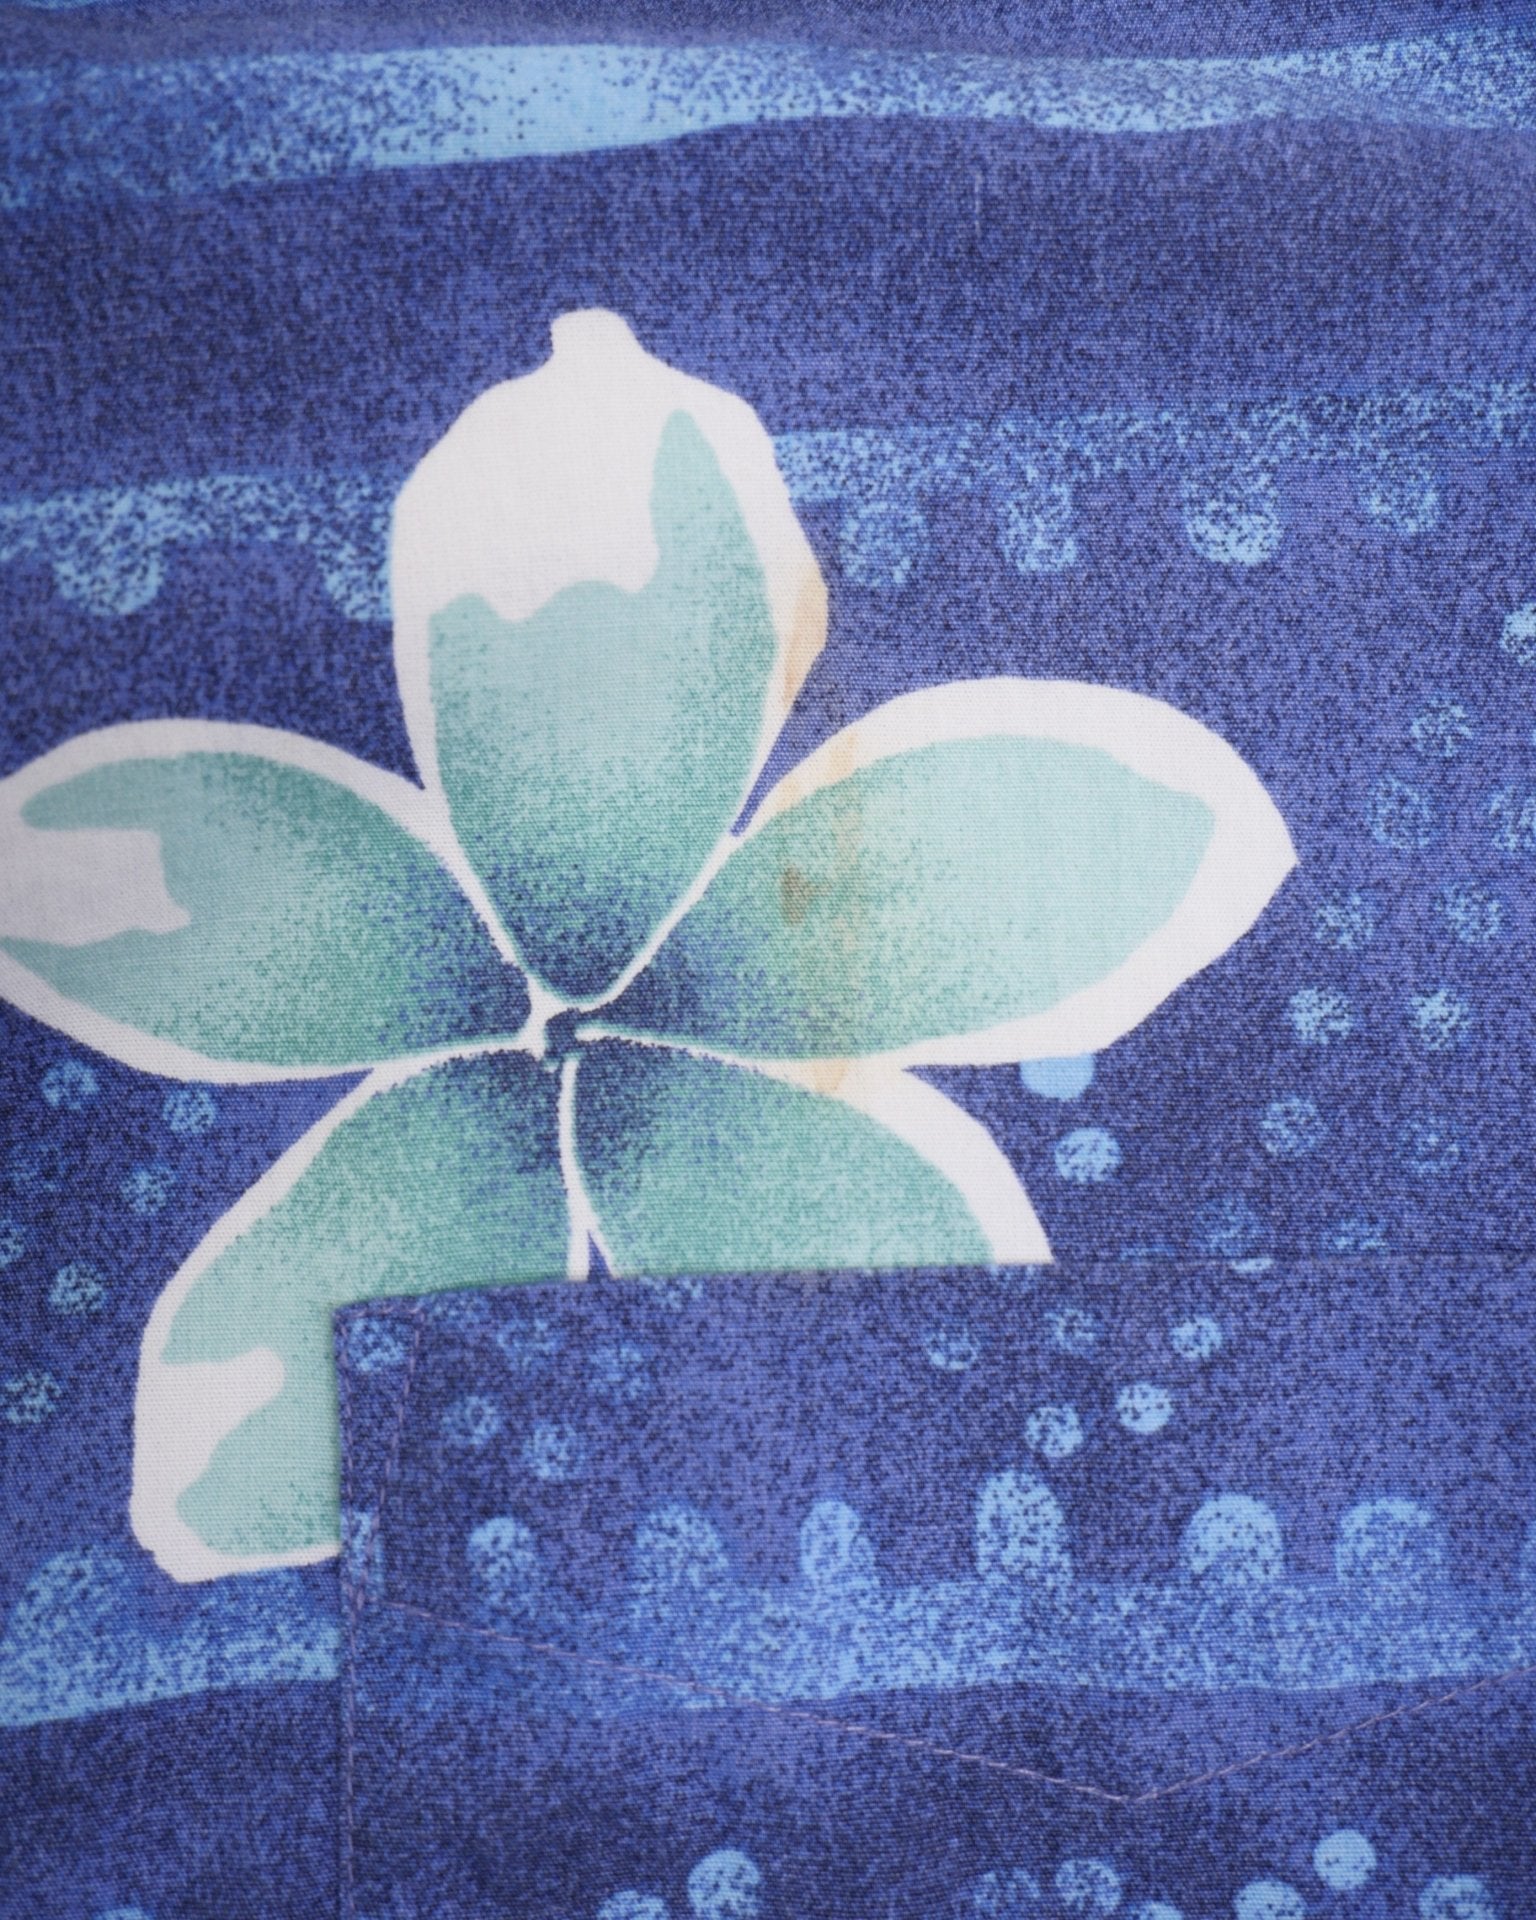 Blue Flower Graphic Vintage Hawaii Kurzarm Hemd - Peeces